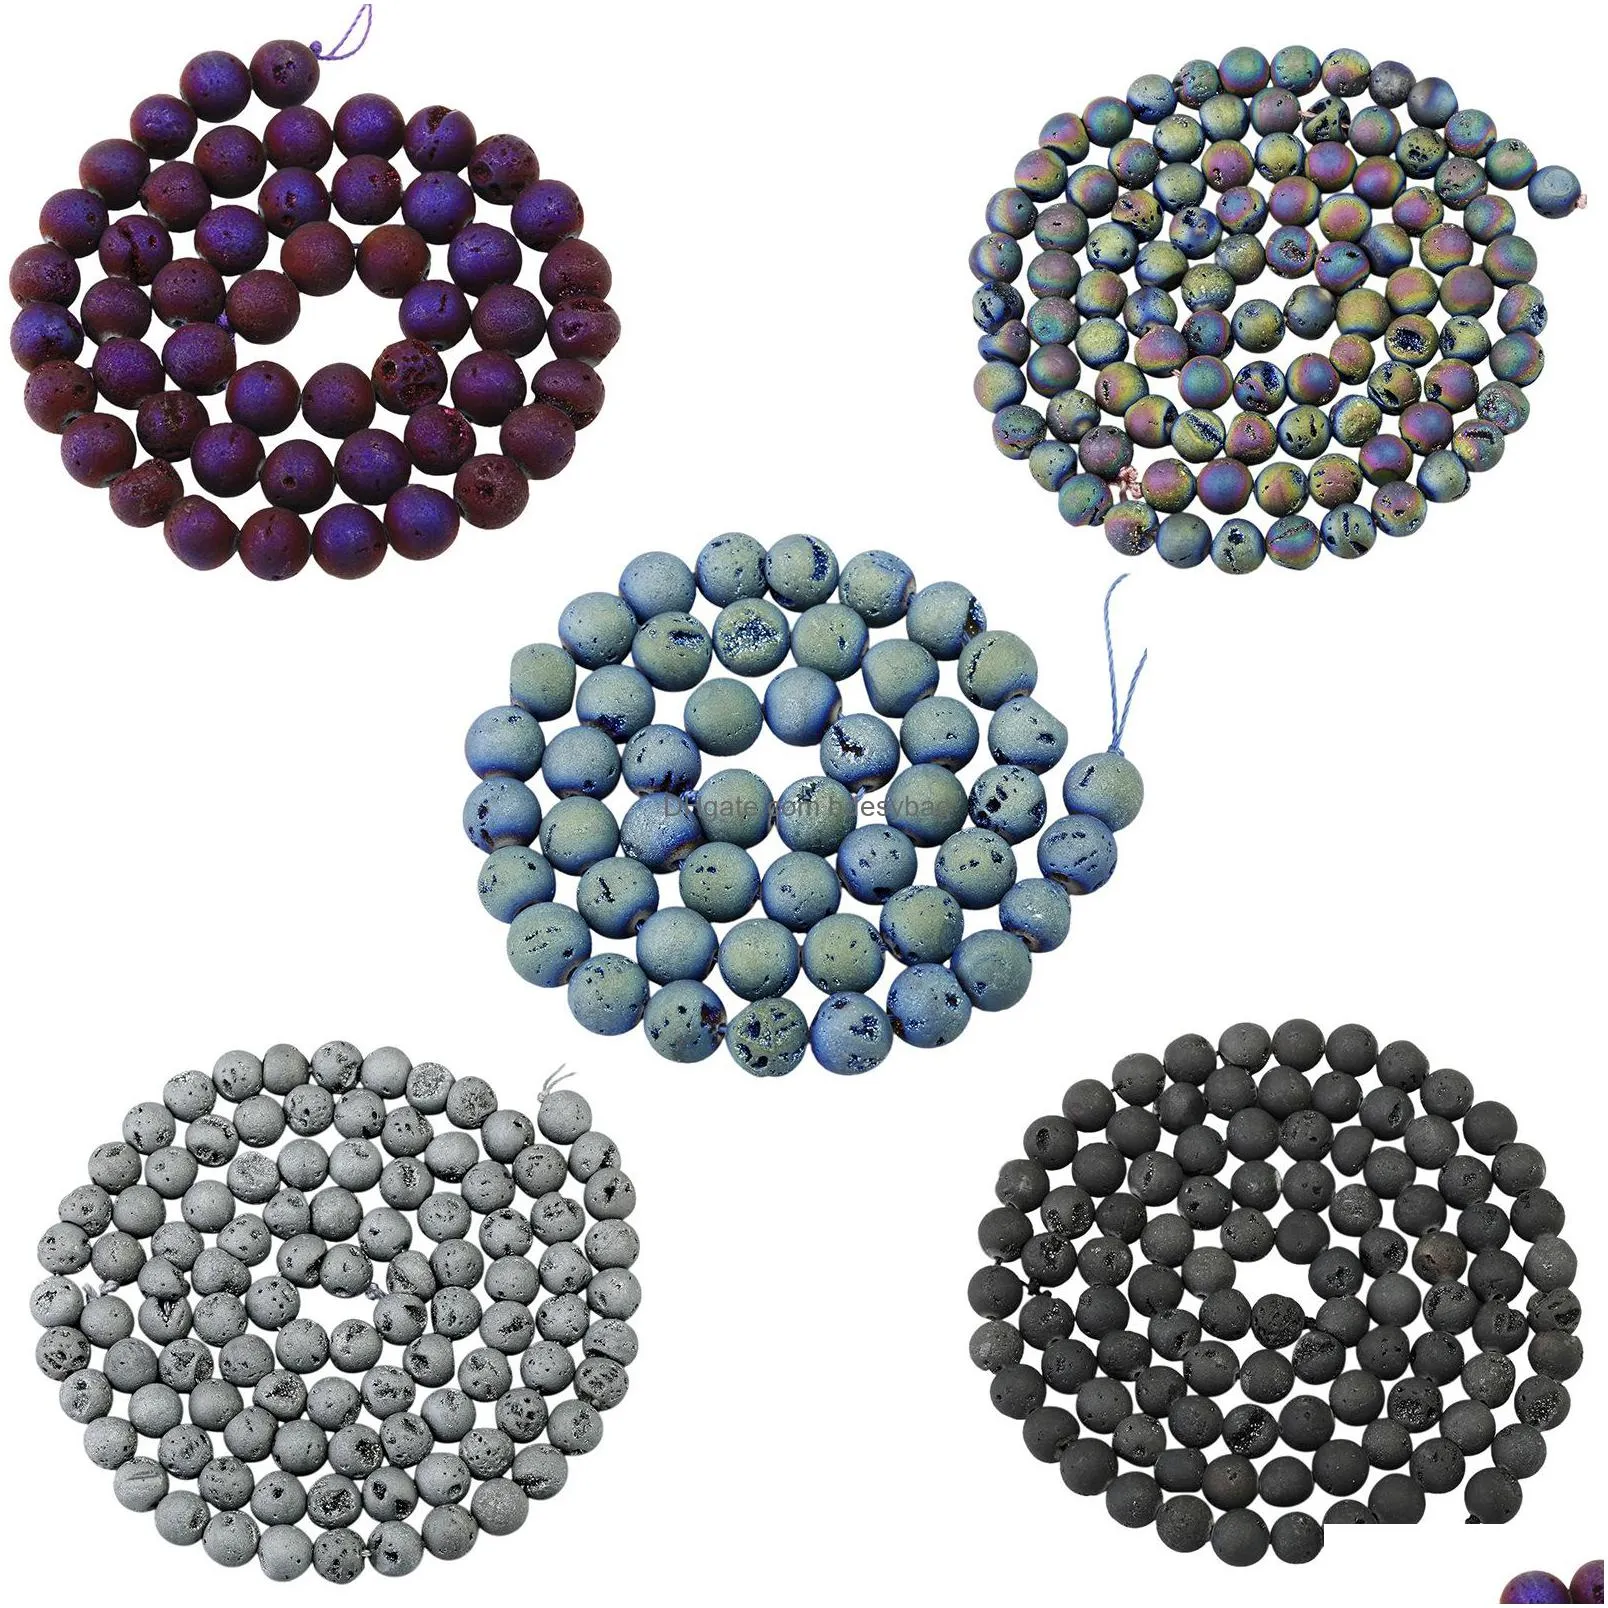 8mm druzy agate crystal round beads 48pcs dursy quartz organic gemstone spherical energy stone healing power for jewelry bracelet mala necklace making 1